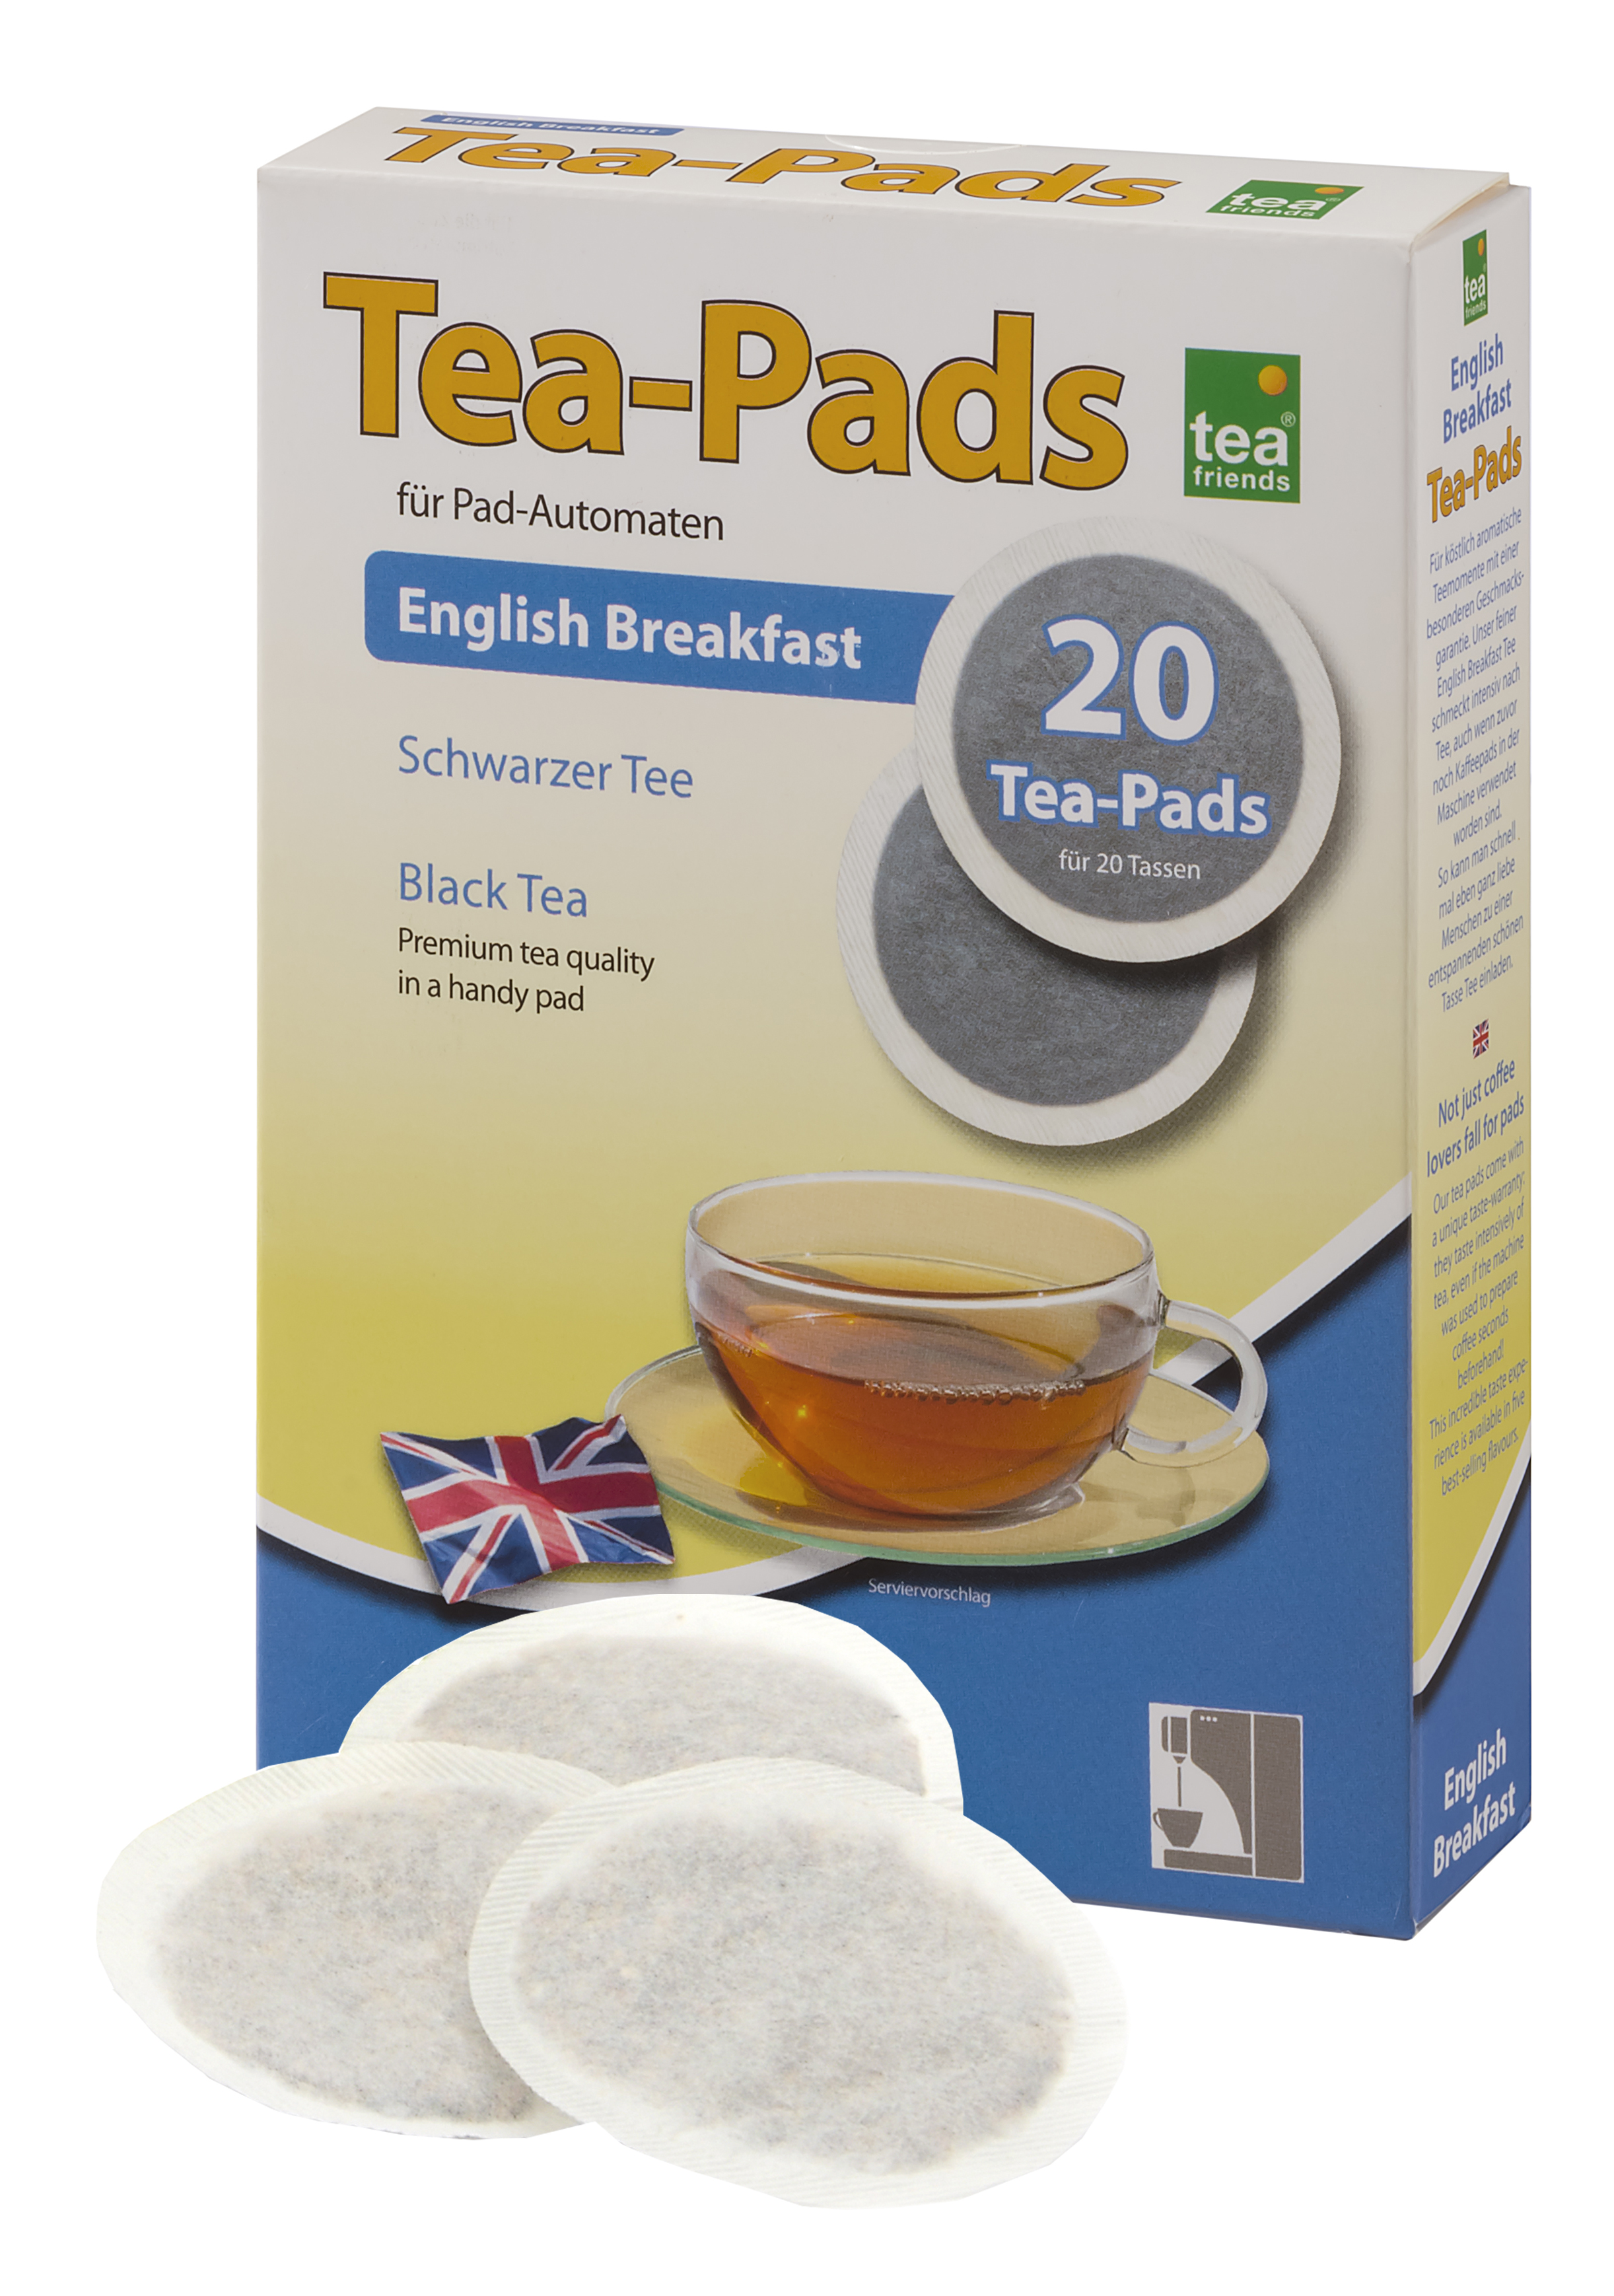 Tea-Pad "English Breakfast"